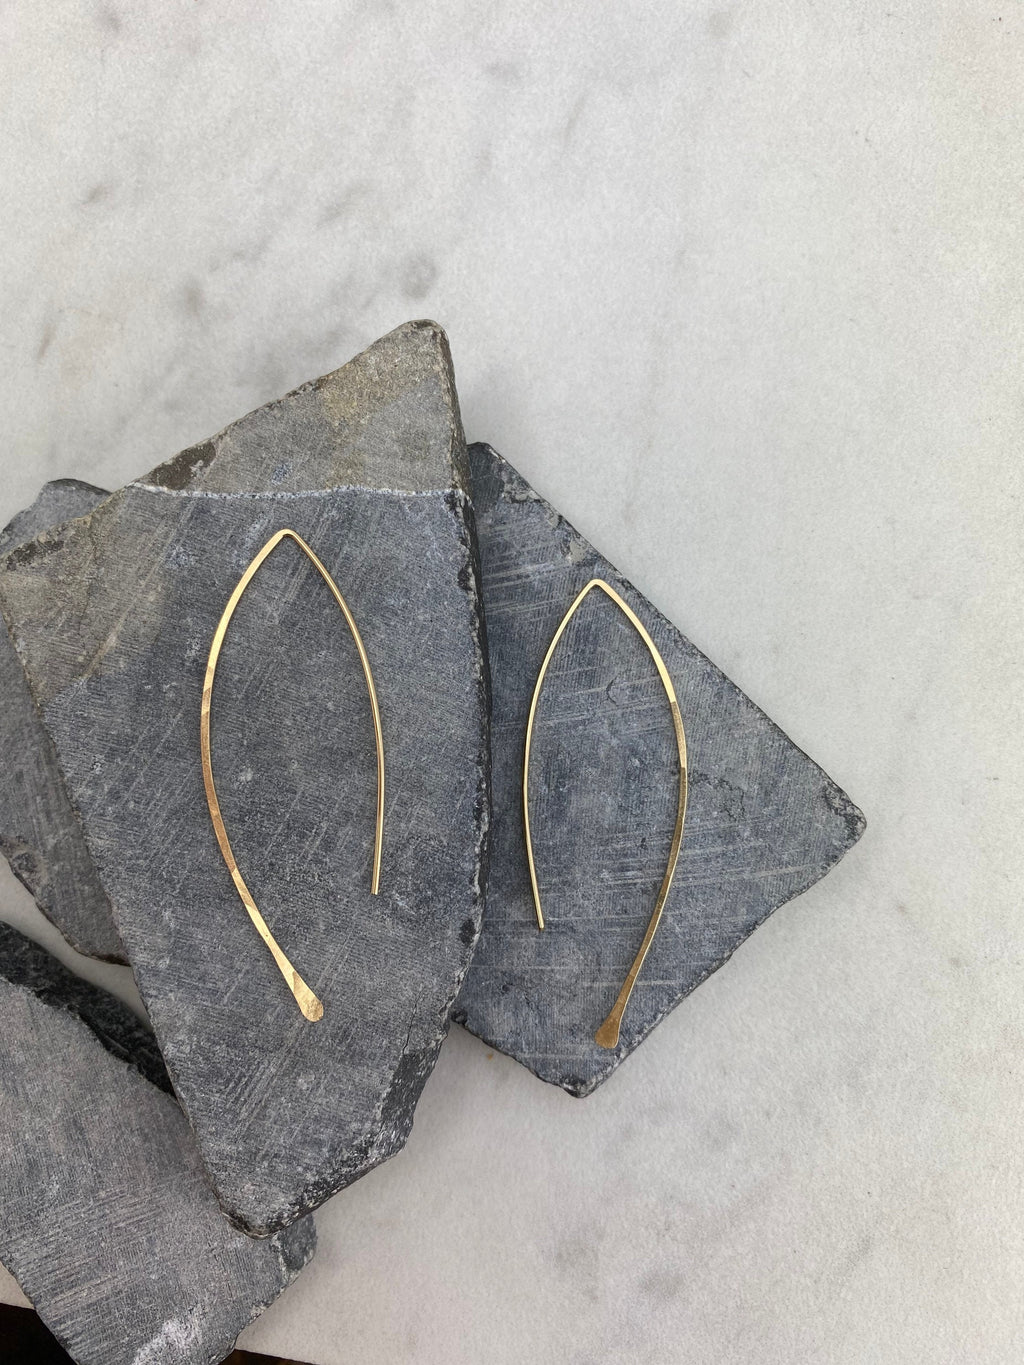 Hammered Gold Threader Earrings, minimalist earrings, drop earrings, open hoops, gold earrings